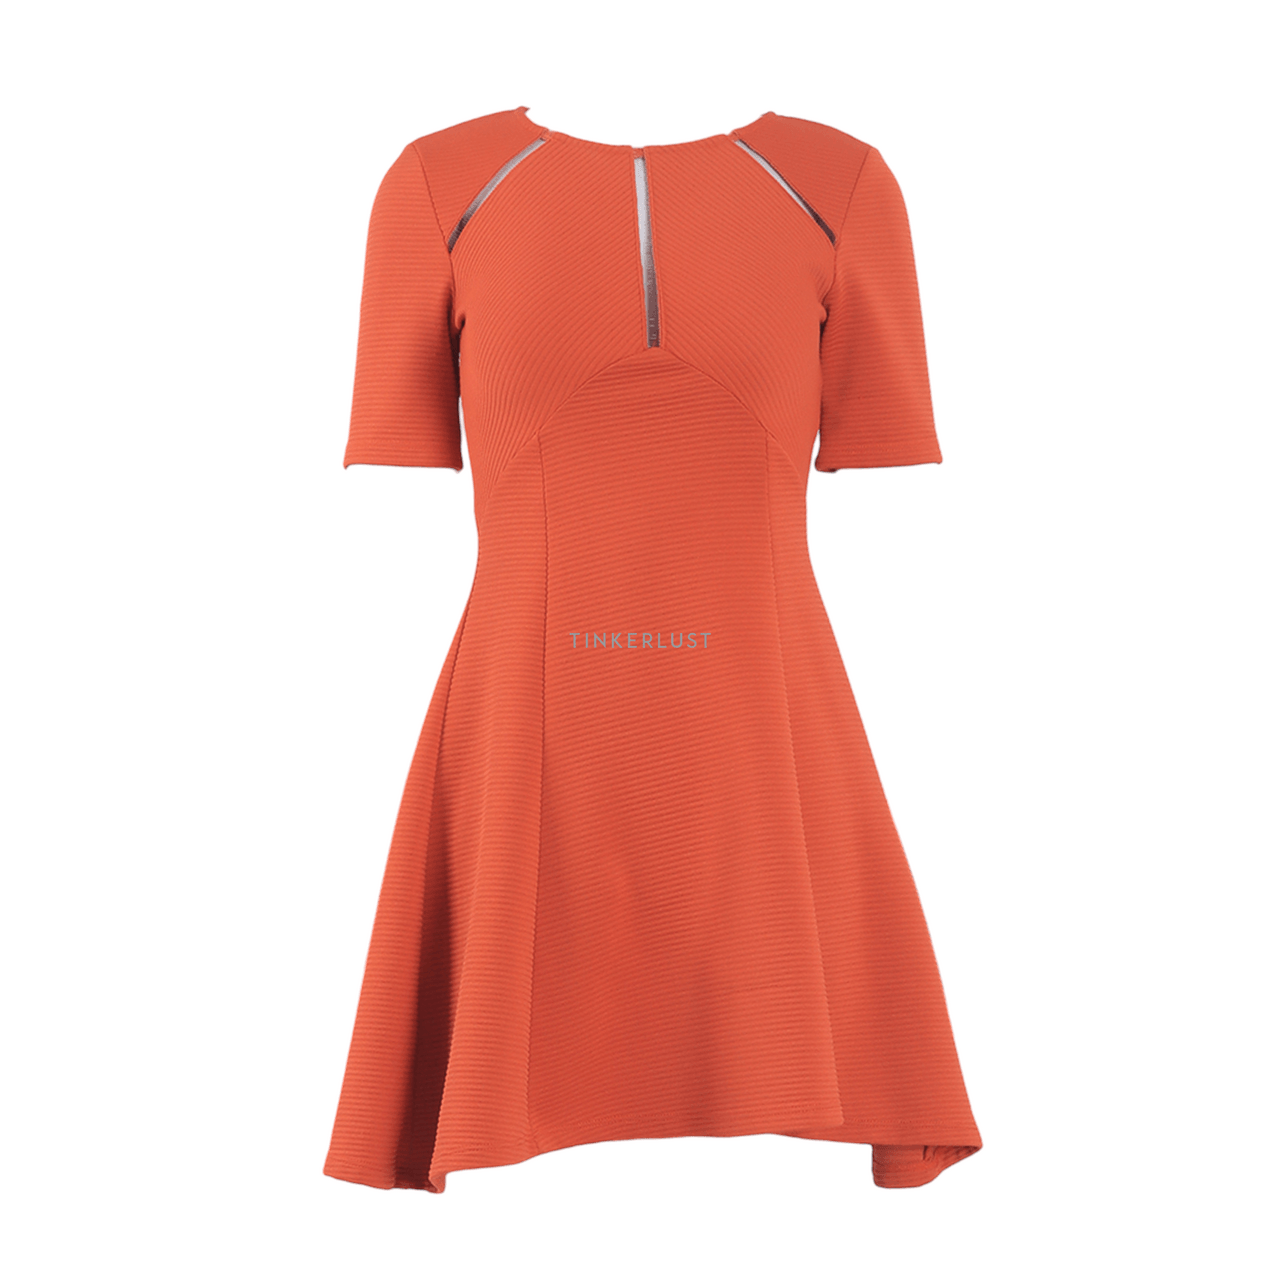 Miss Selfridge Orange Mini Dress